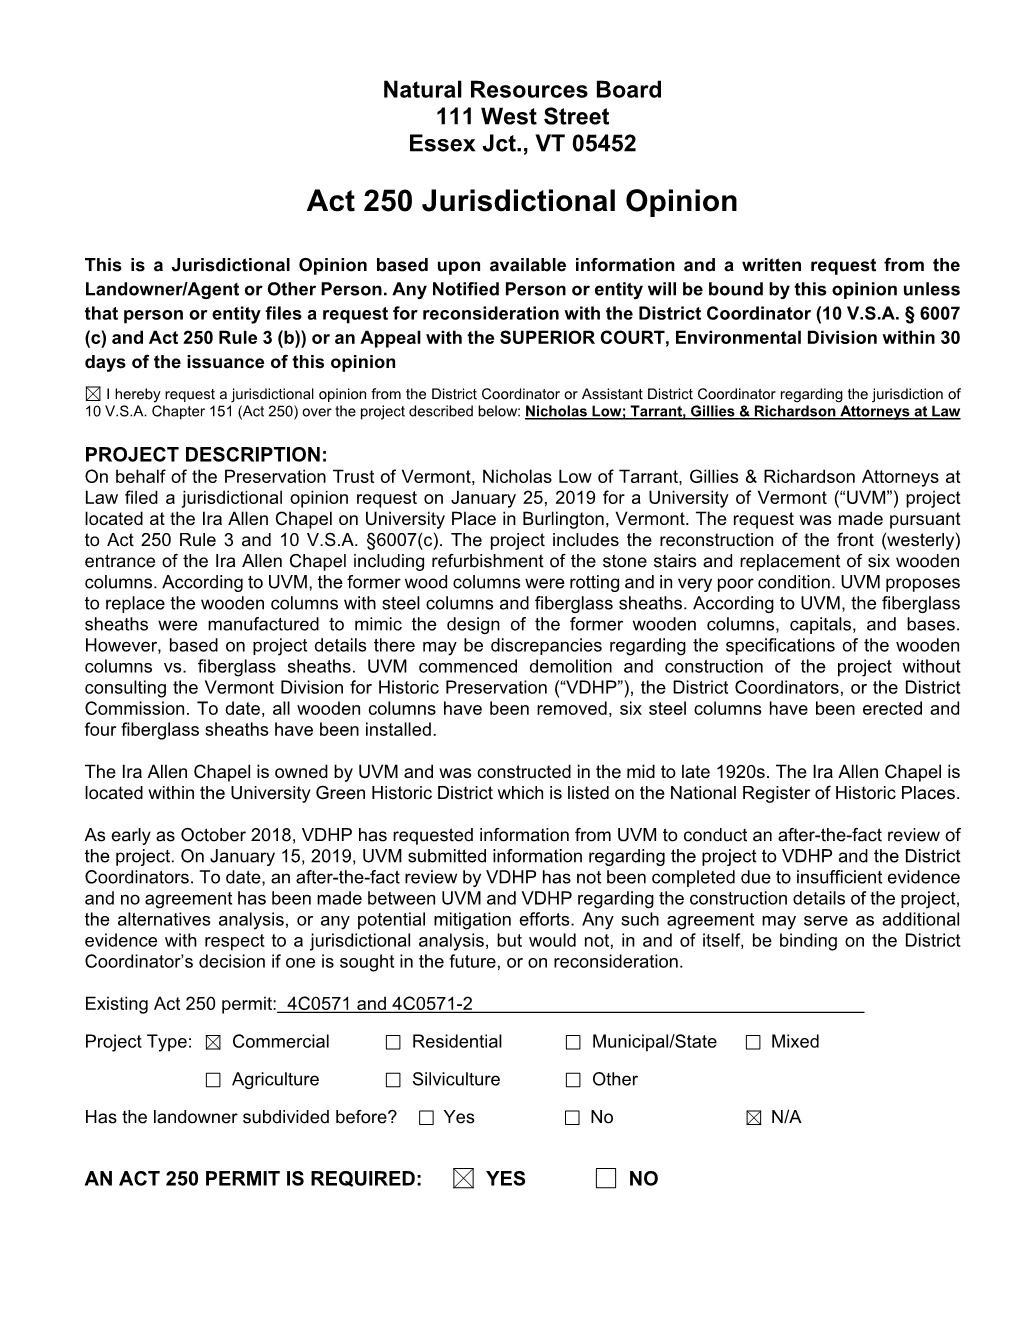 Act 250 Jurisdictional Opinion